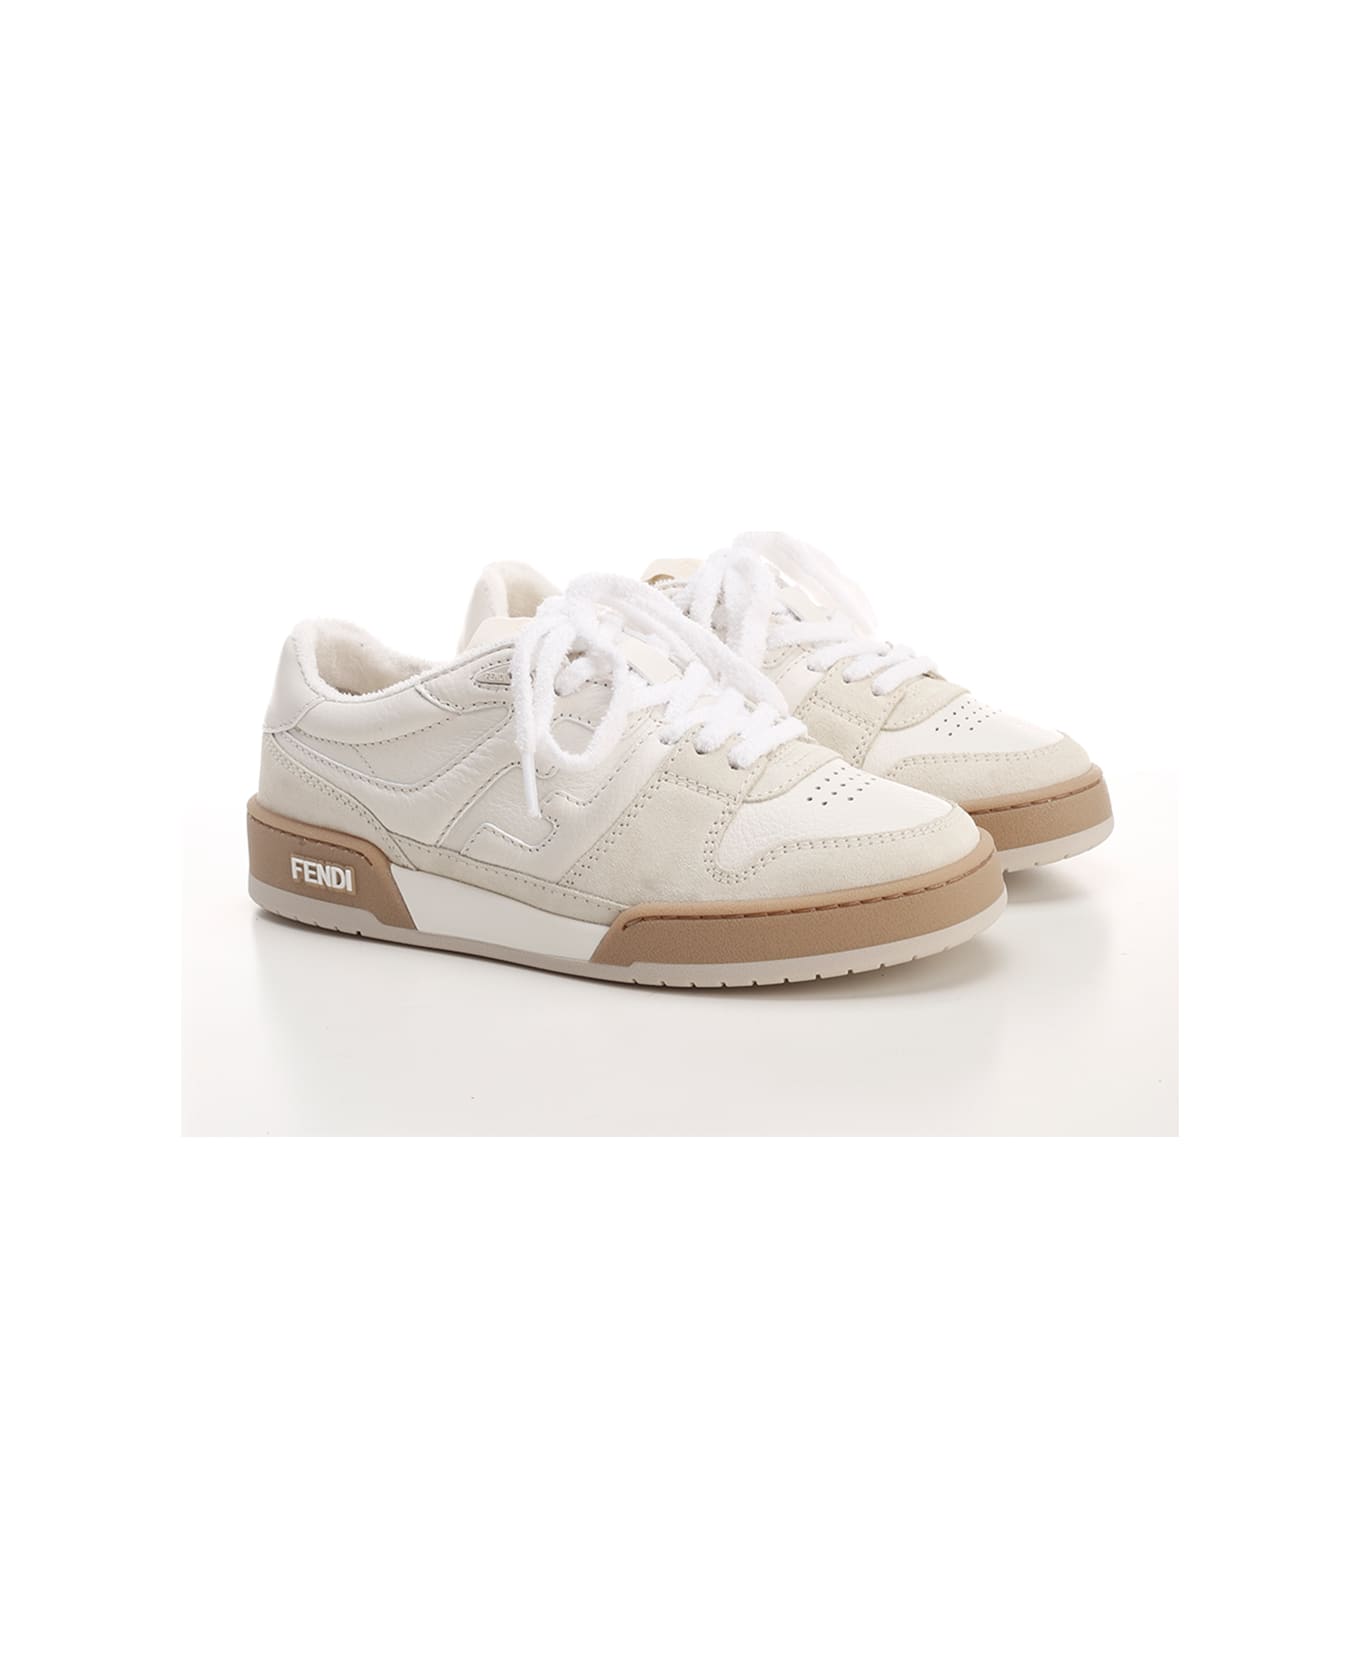 Fendi Match Sneakers - Fhs Ice White